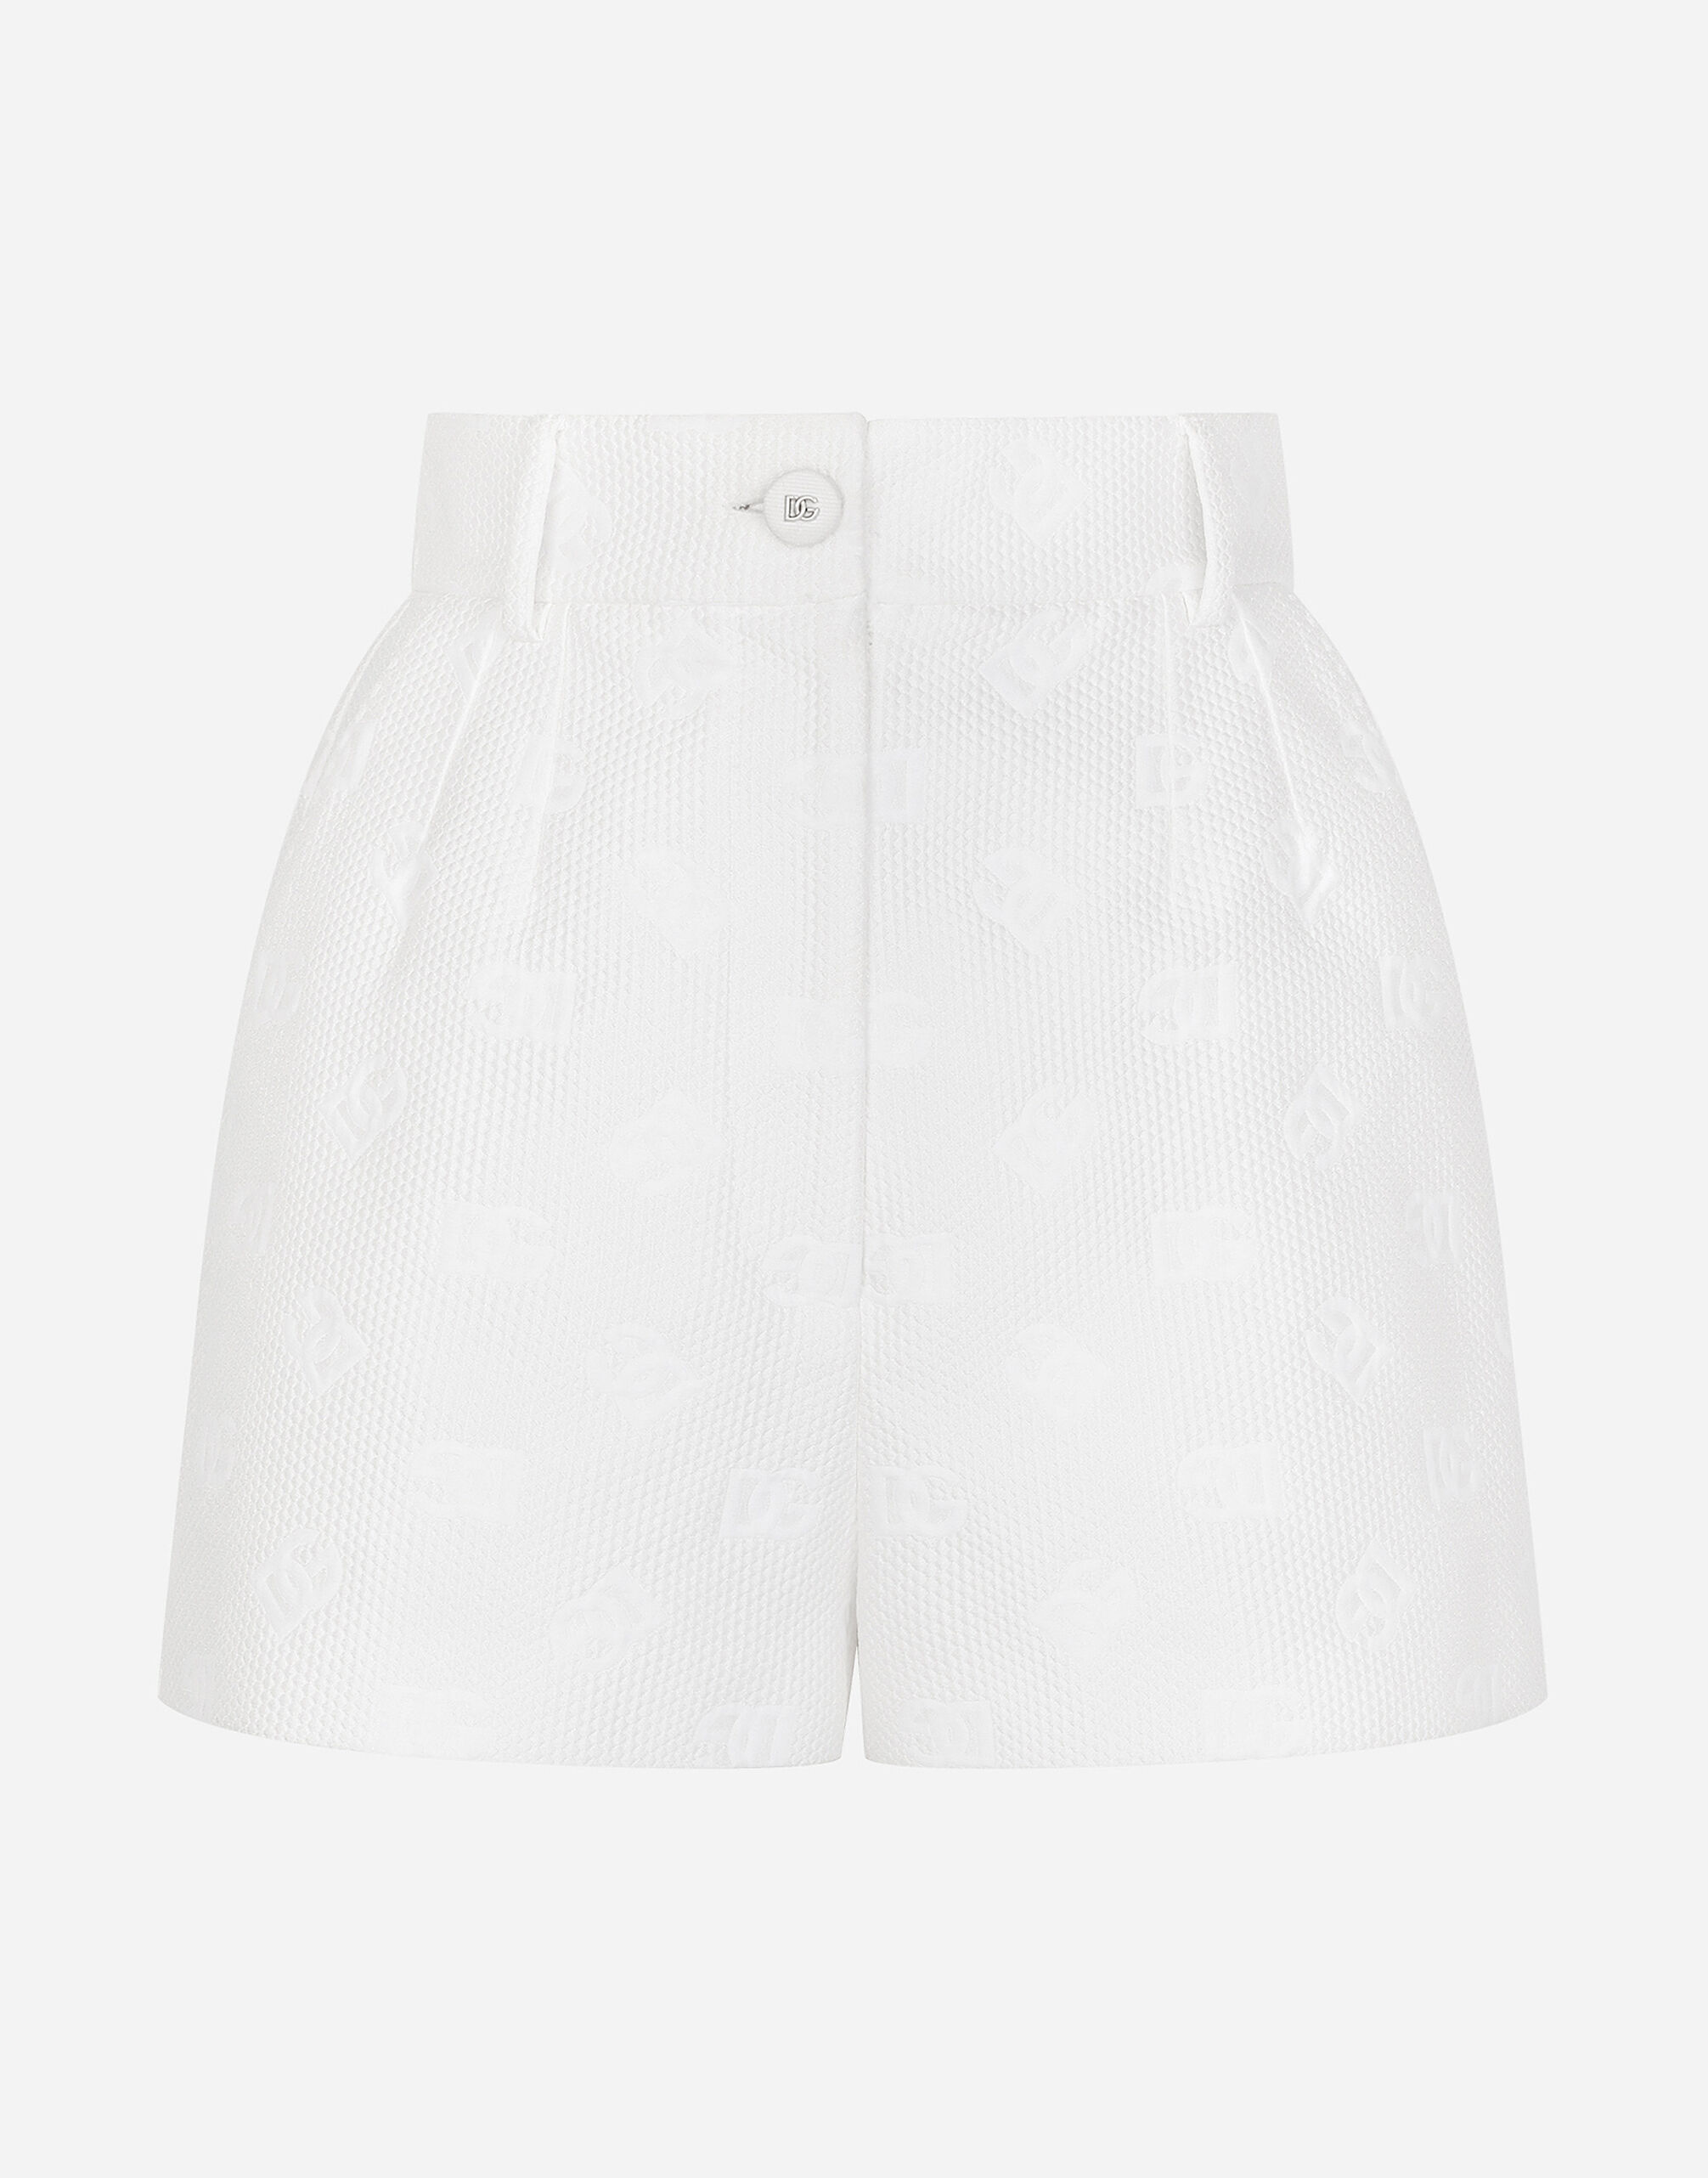 Dolce & Gabbana Jacquard shorts with all-over DG logo Print FTC4TTHI1TK